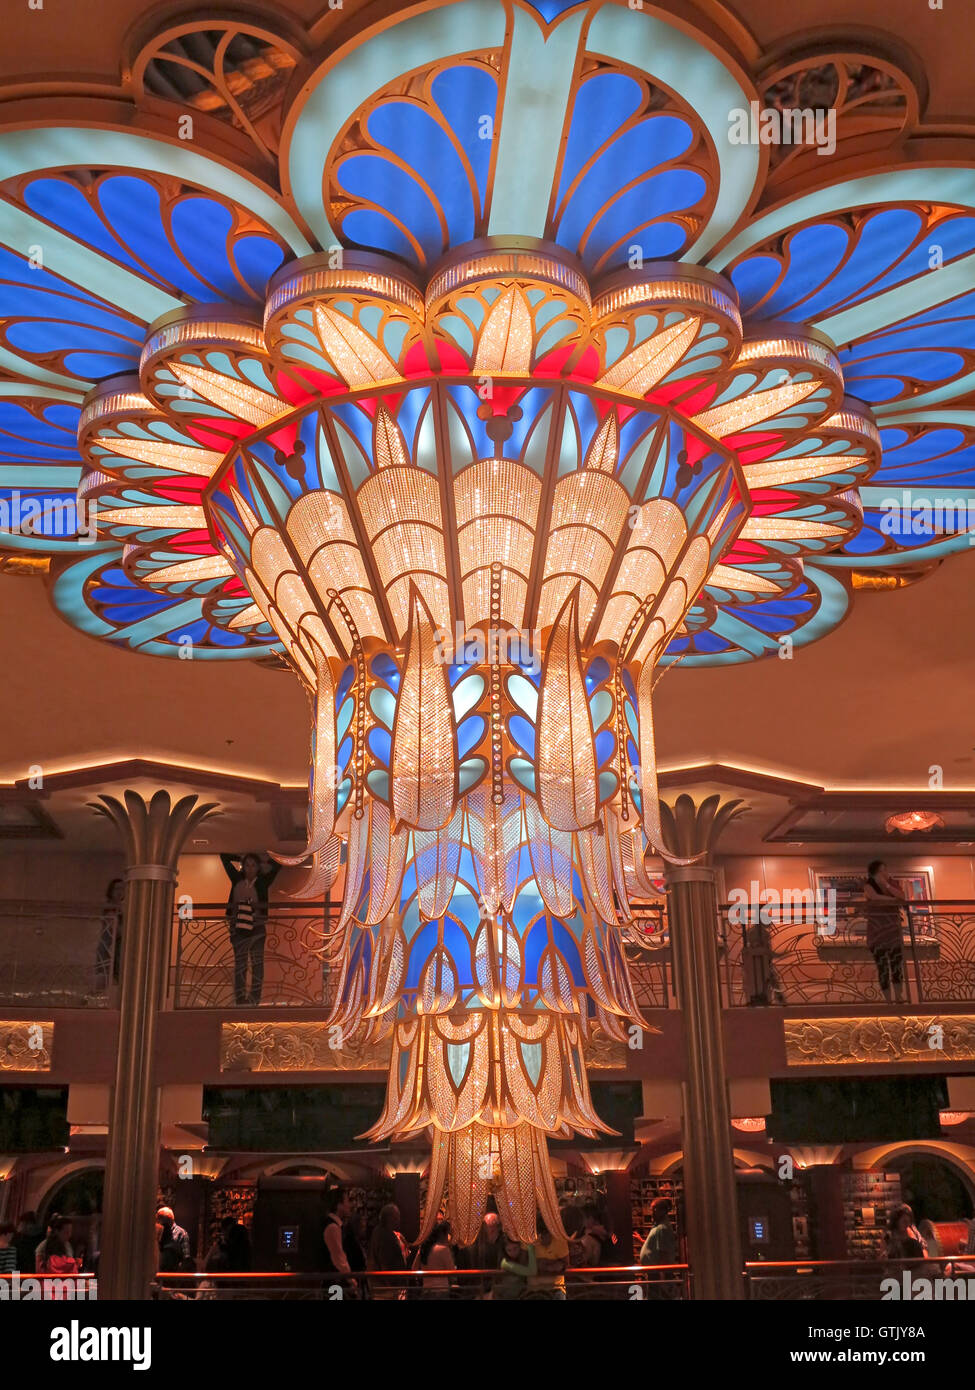 Nassau, Bahamas. January 30th, 2013. The Art Deco-style Chandelier on the Disney Dream Cruise Ship Stock Photo